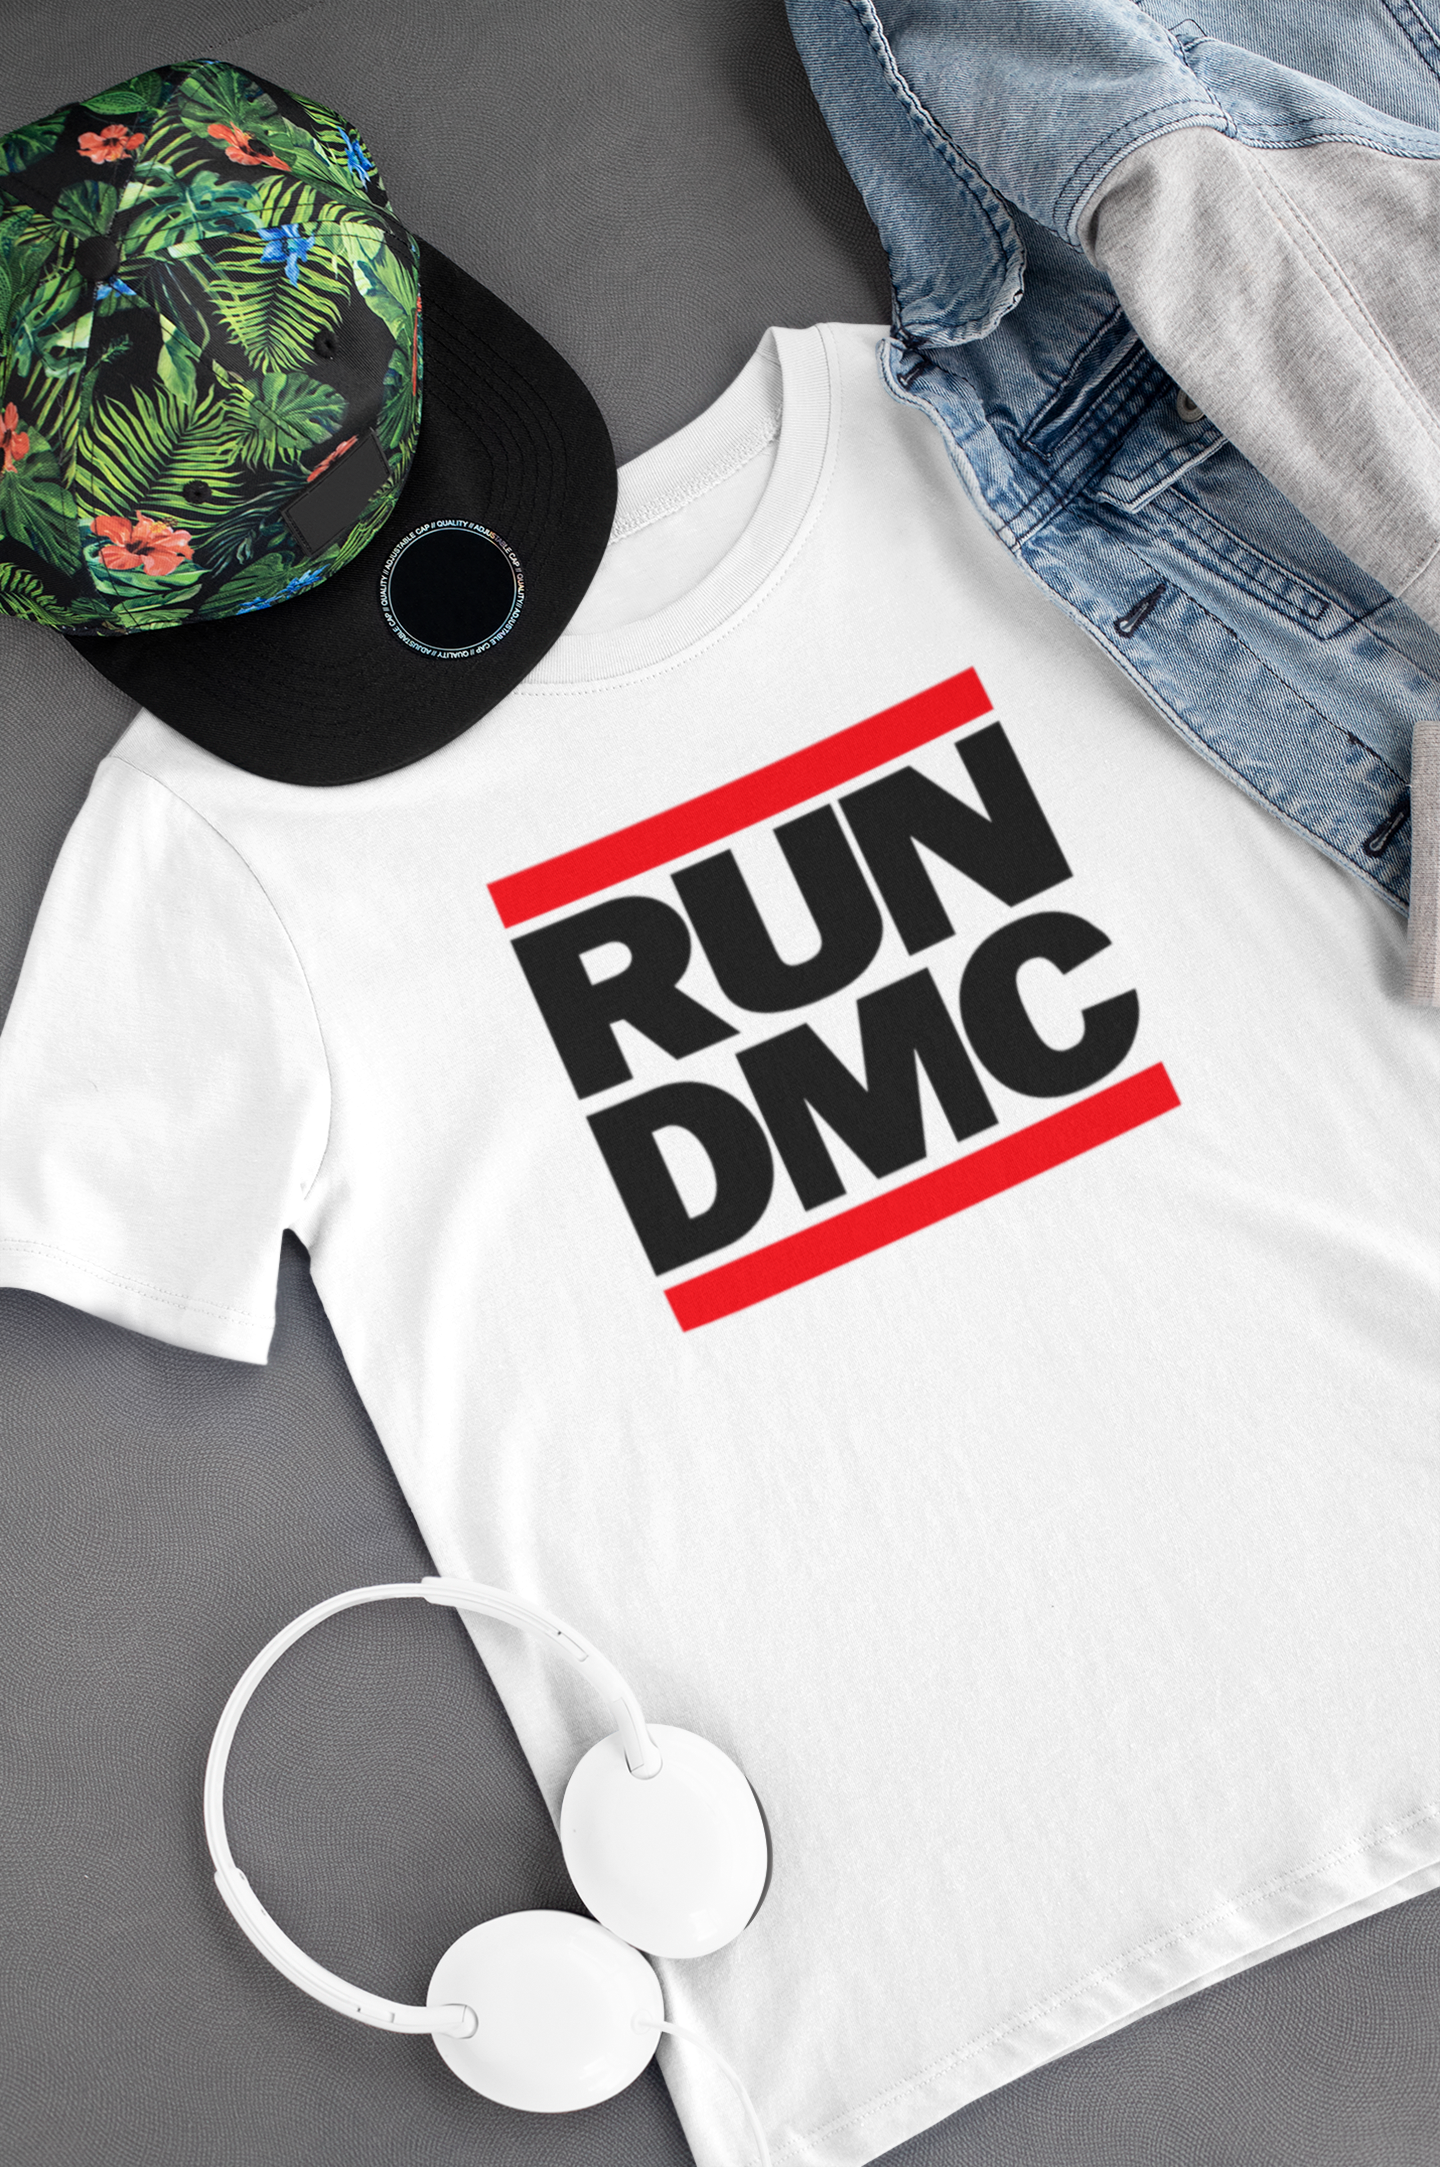 Camiseta "Run DMC" Clássica - Música